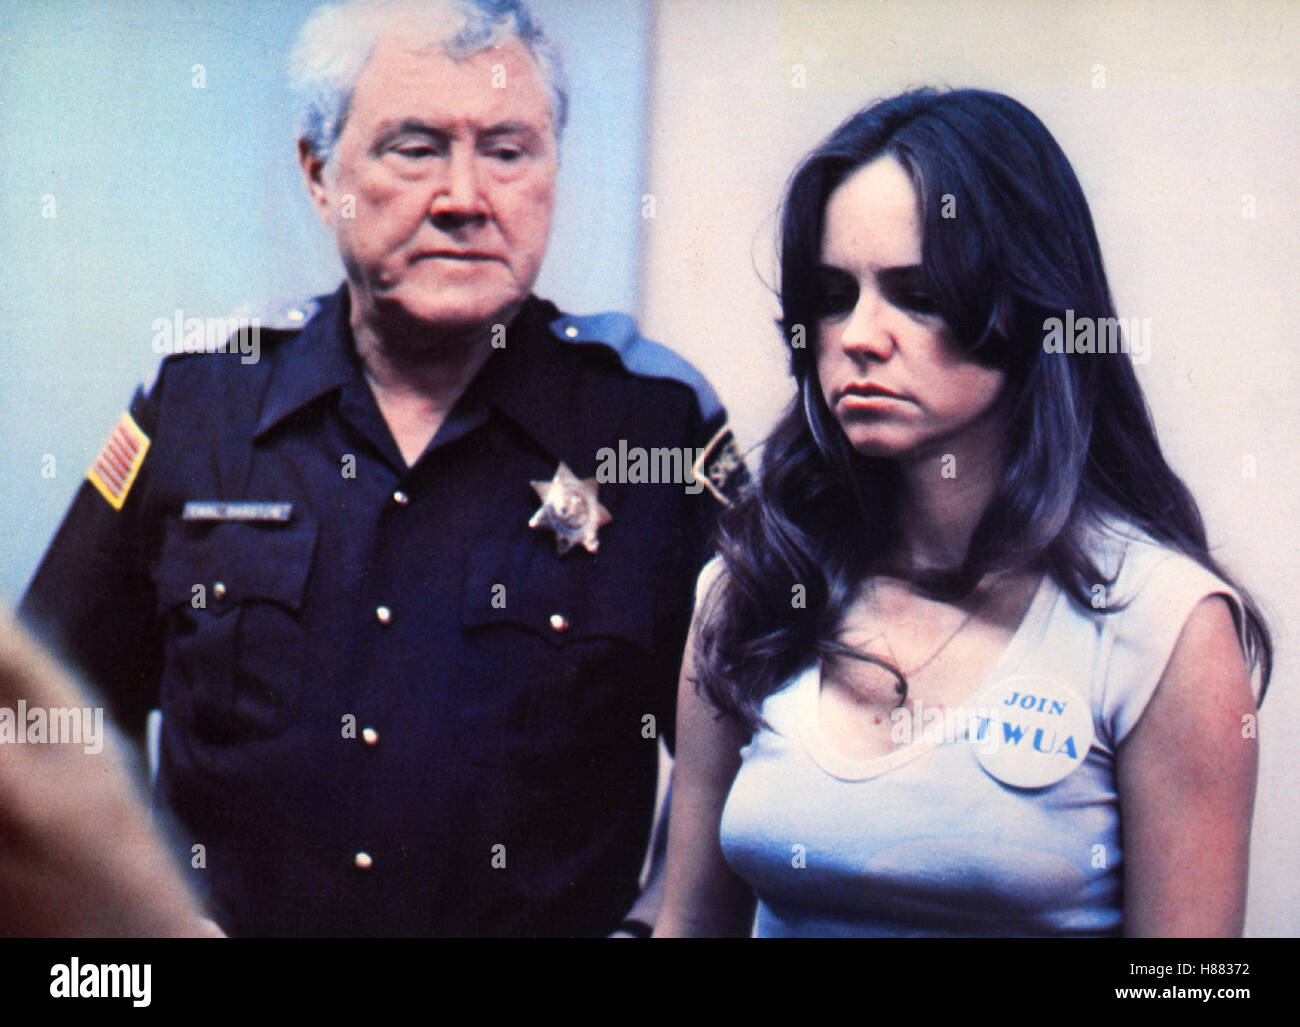 La norma Rae, (NORMA RAE) USA 1979, Regie: Martin Ritt, Sally Field, Stichwort: US-Polizist, US-Polizeiuniform Foto Stock